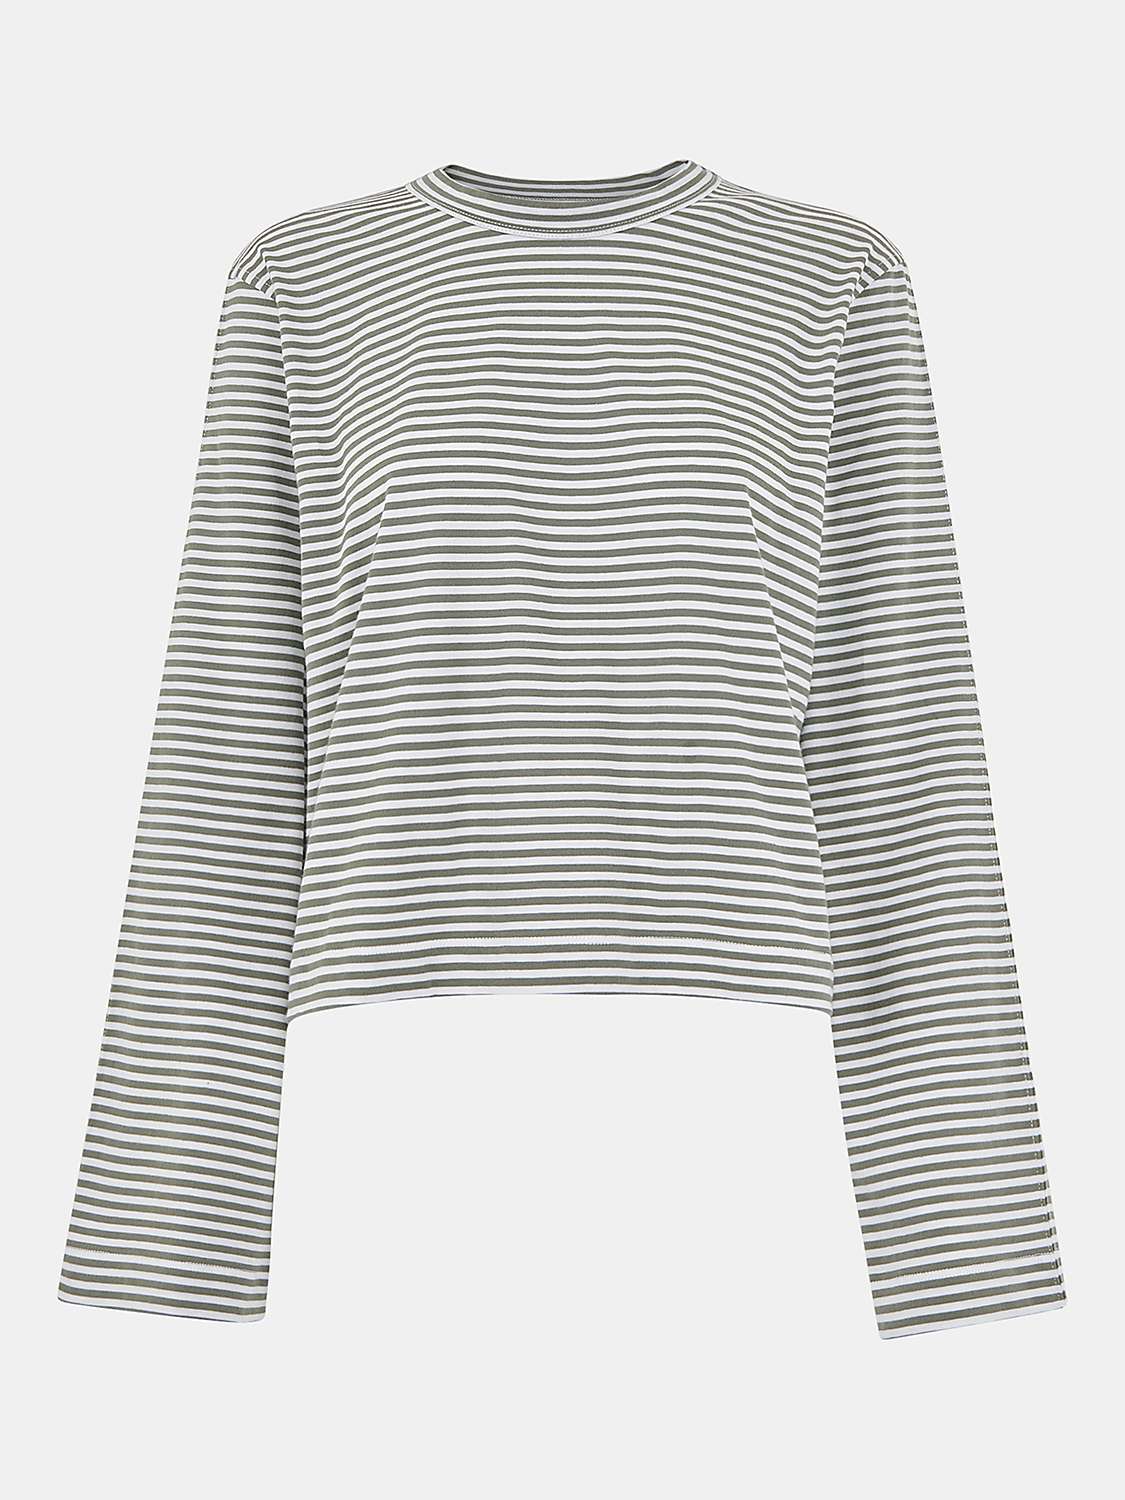 Buy Whistles Long Sleeve Stripe Cropped T-Shirt, Khaki/White Online at johnlewis.com